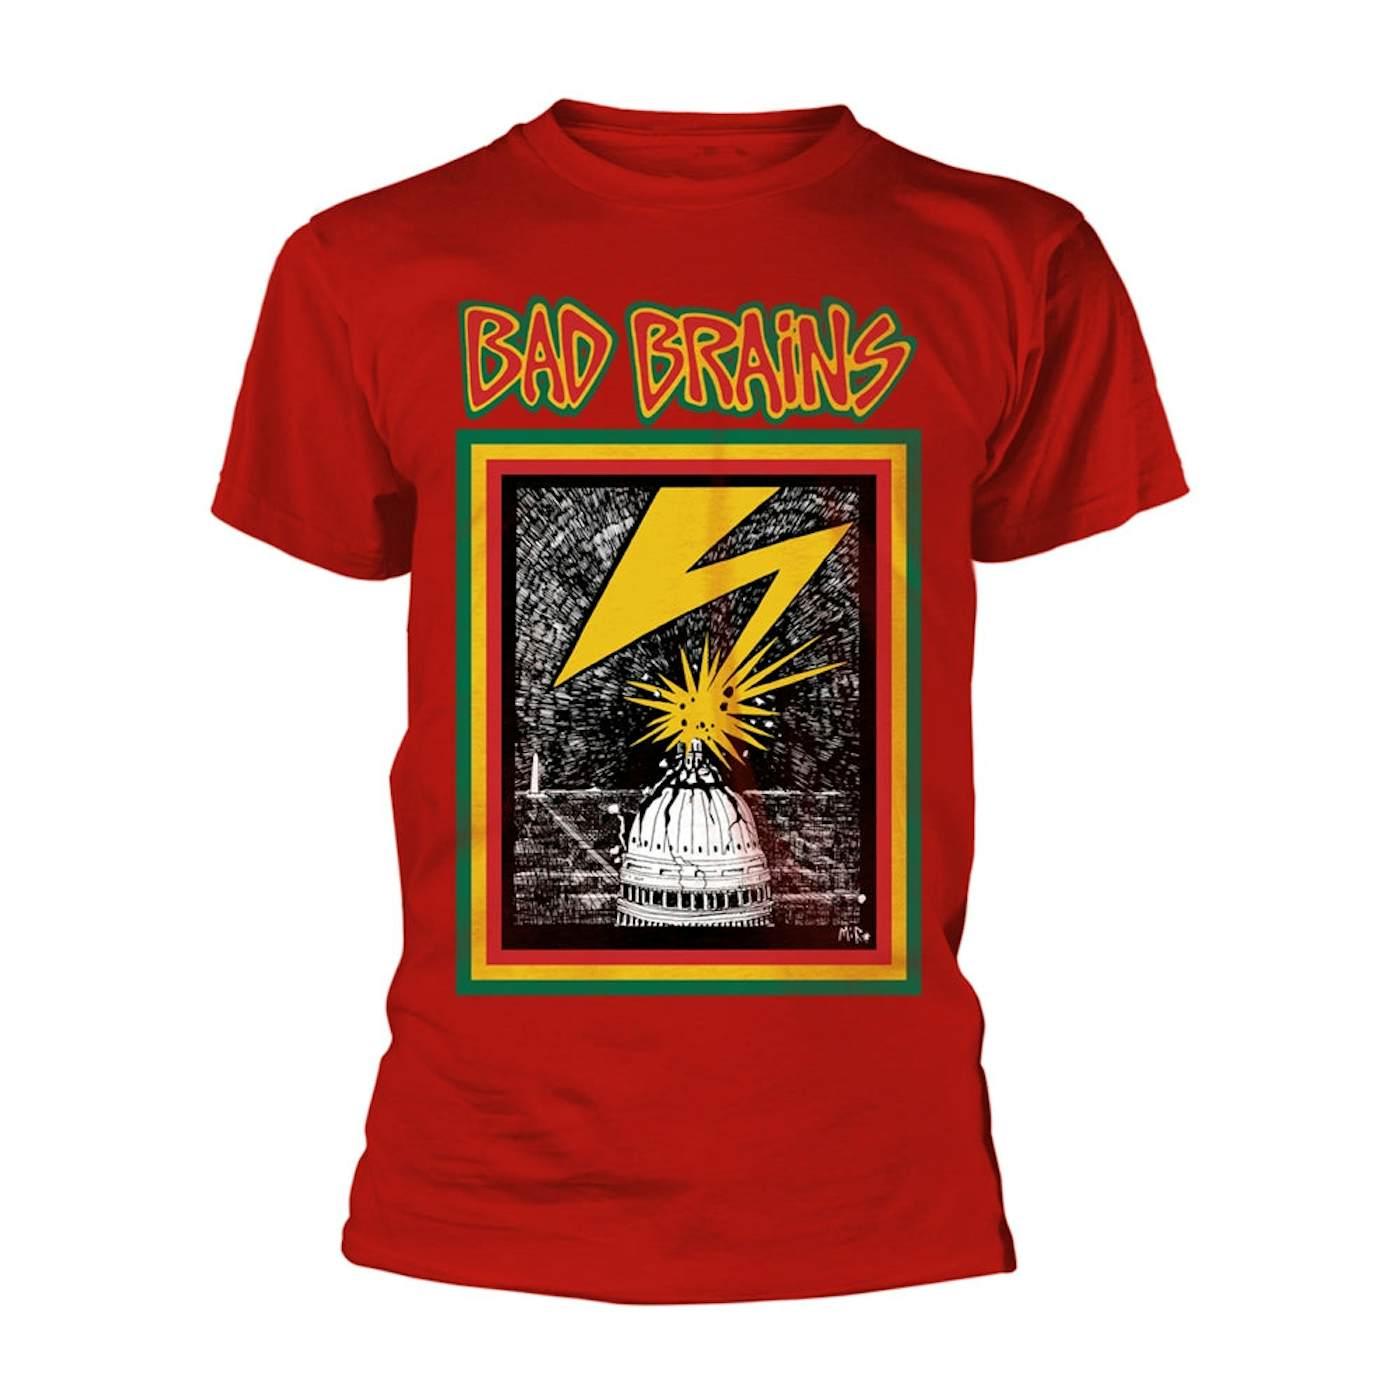 Bad Brains T Shirt - Bad Brains (Red)